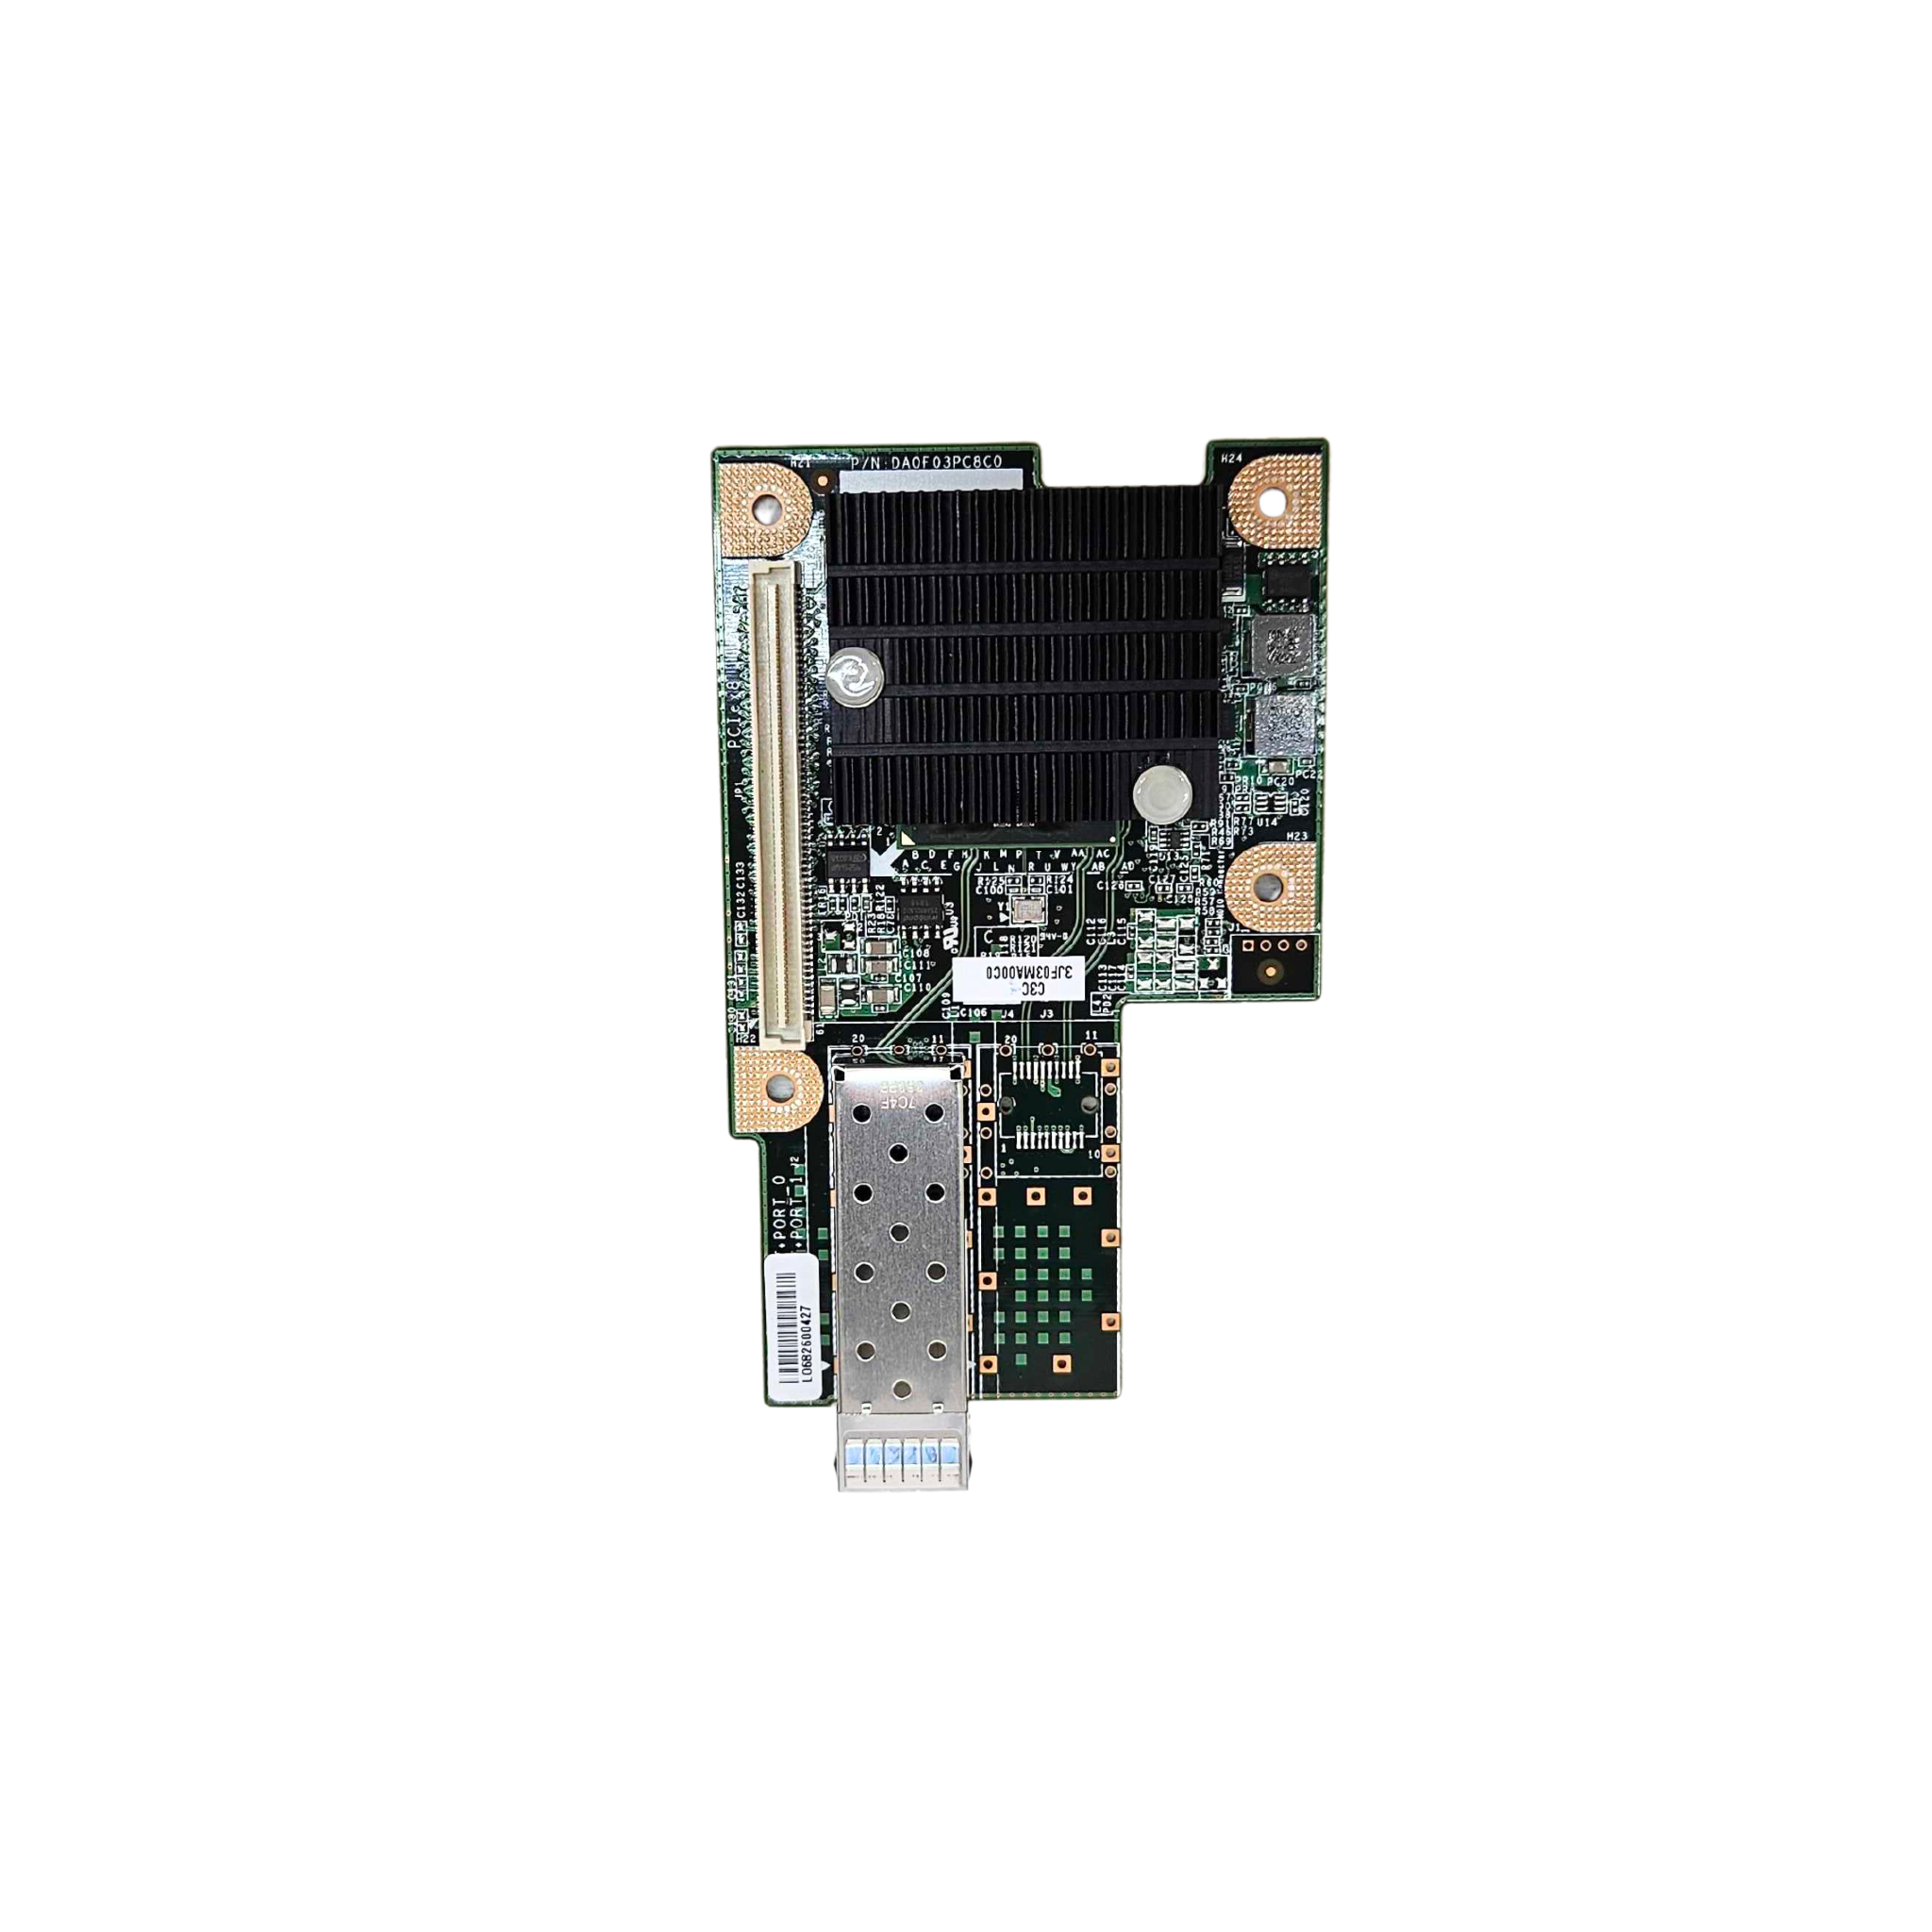 Quanta PCIEX8 10GBE SFP+ Single Port Network Adapter (DA0F03PC8C0)